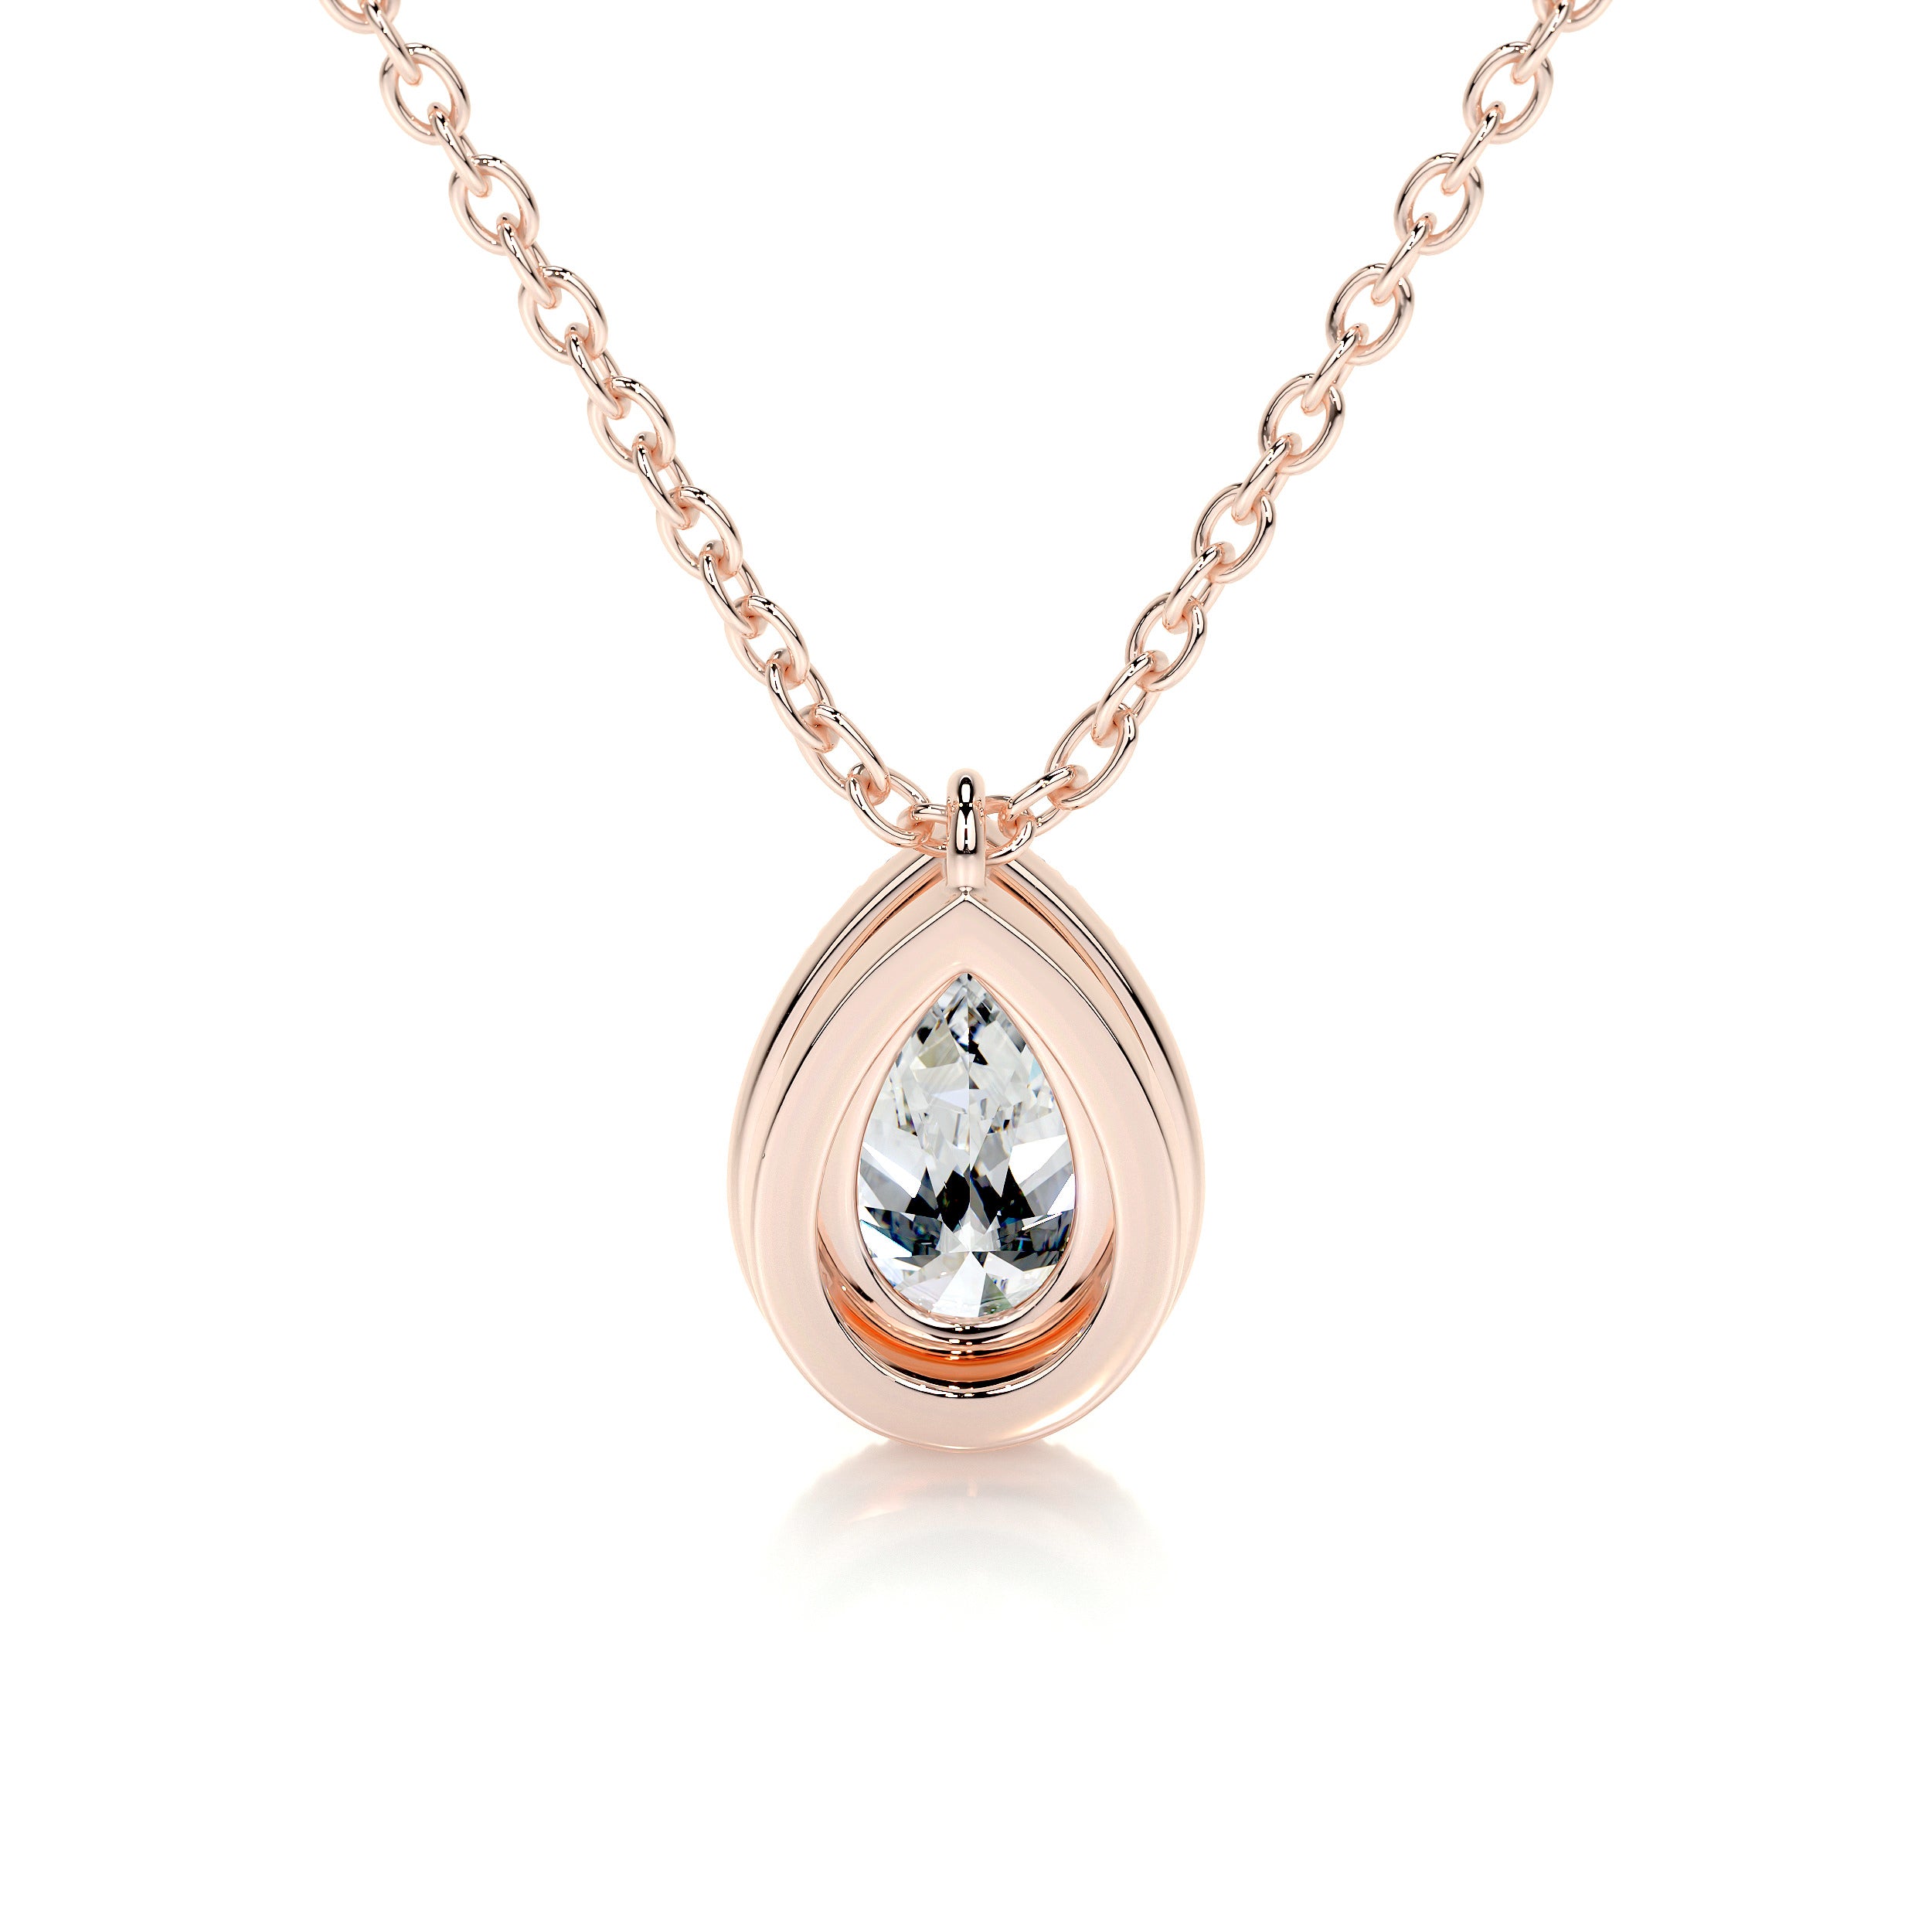 Nancy Diamond Pendant   (1.75 Carat) -14K Rose Gold